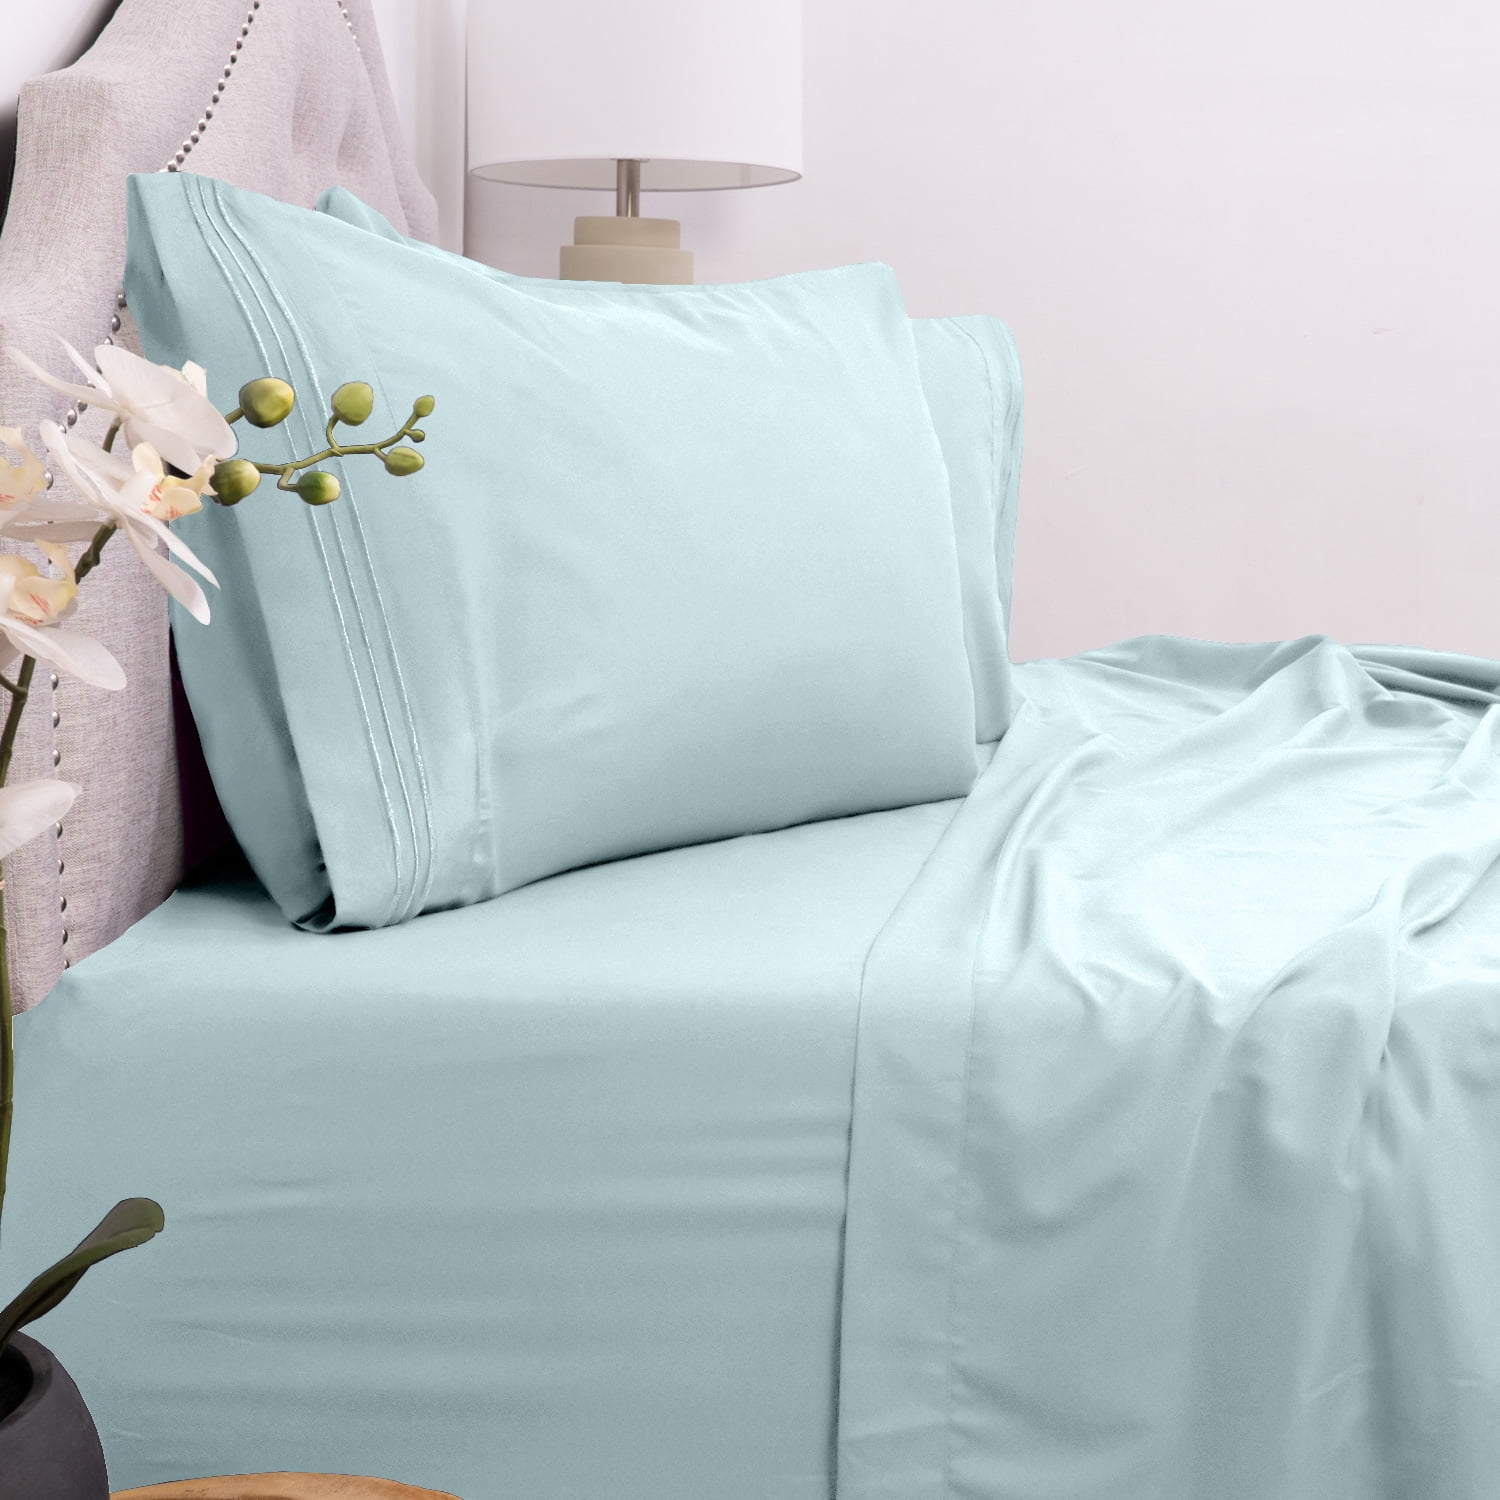 Egyptian Luxury Comfort 1800 Count 4 Piece Deep Pocket Bed Sheet Set Navy Blue 